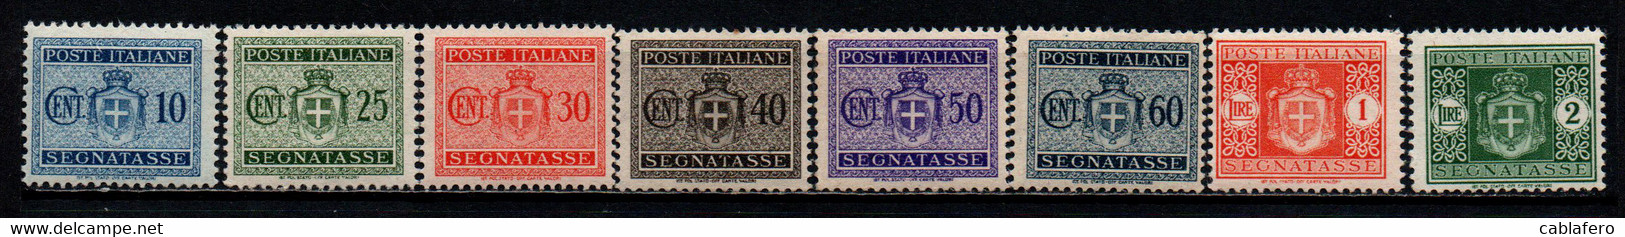 ITALIA LUOGOTENENZA - 1945 - NUOVO STEMMA SENZA FASCI - FILIGRANA RUOTA ALATA - MNH - Taxe